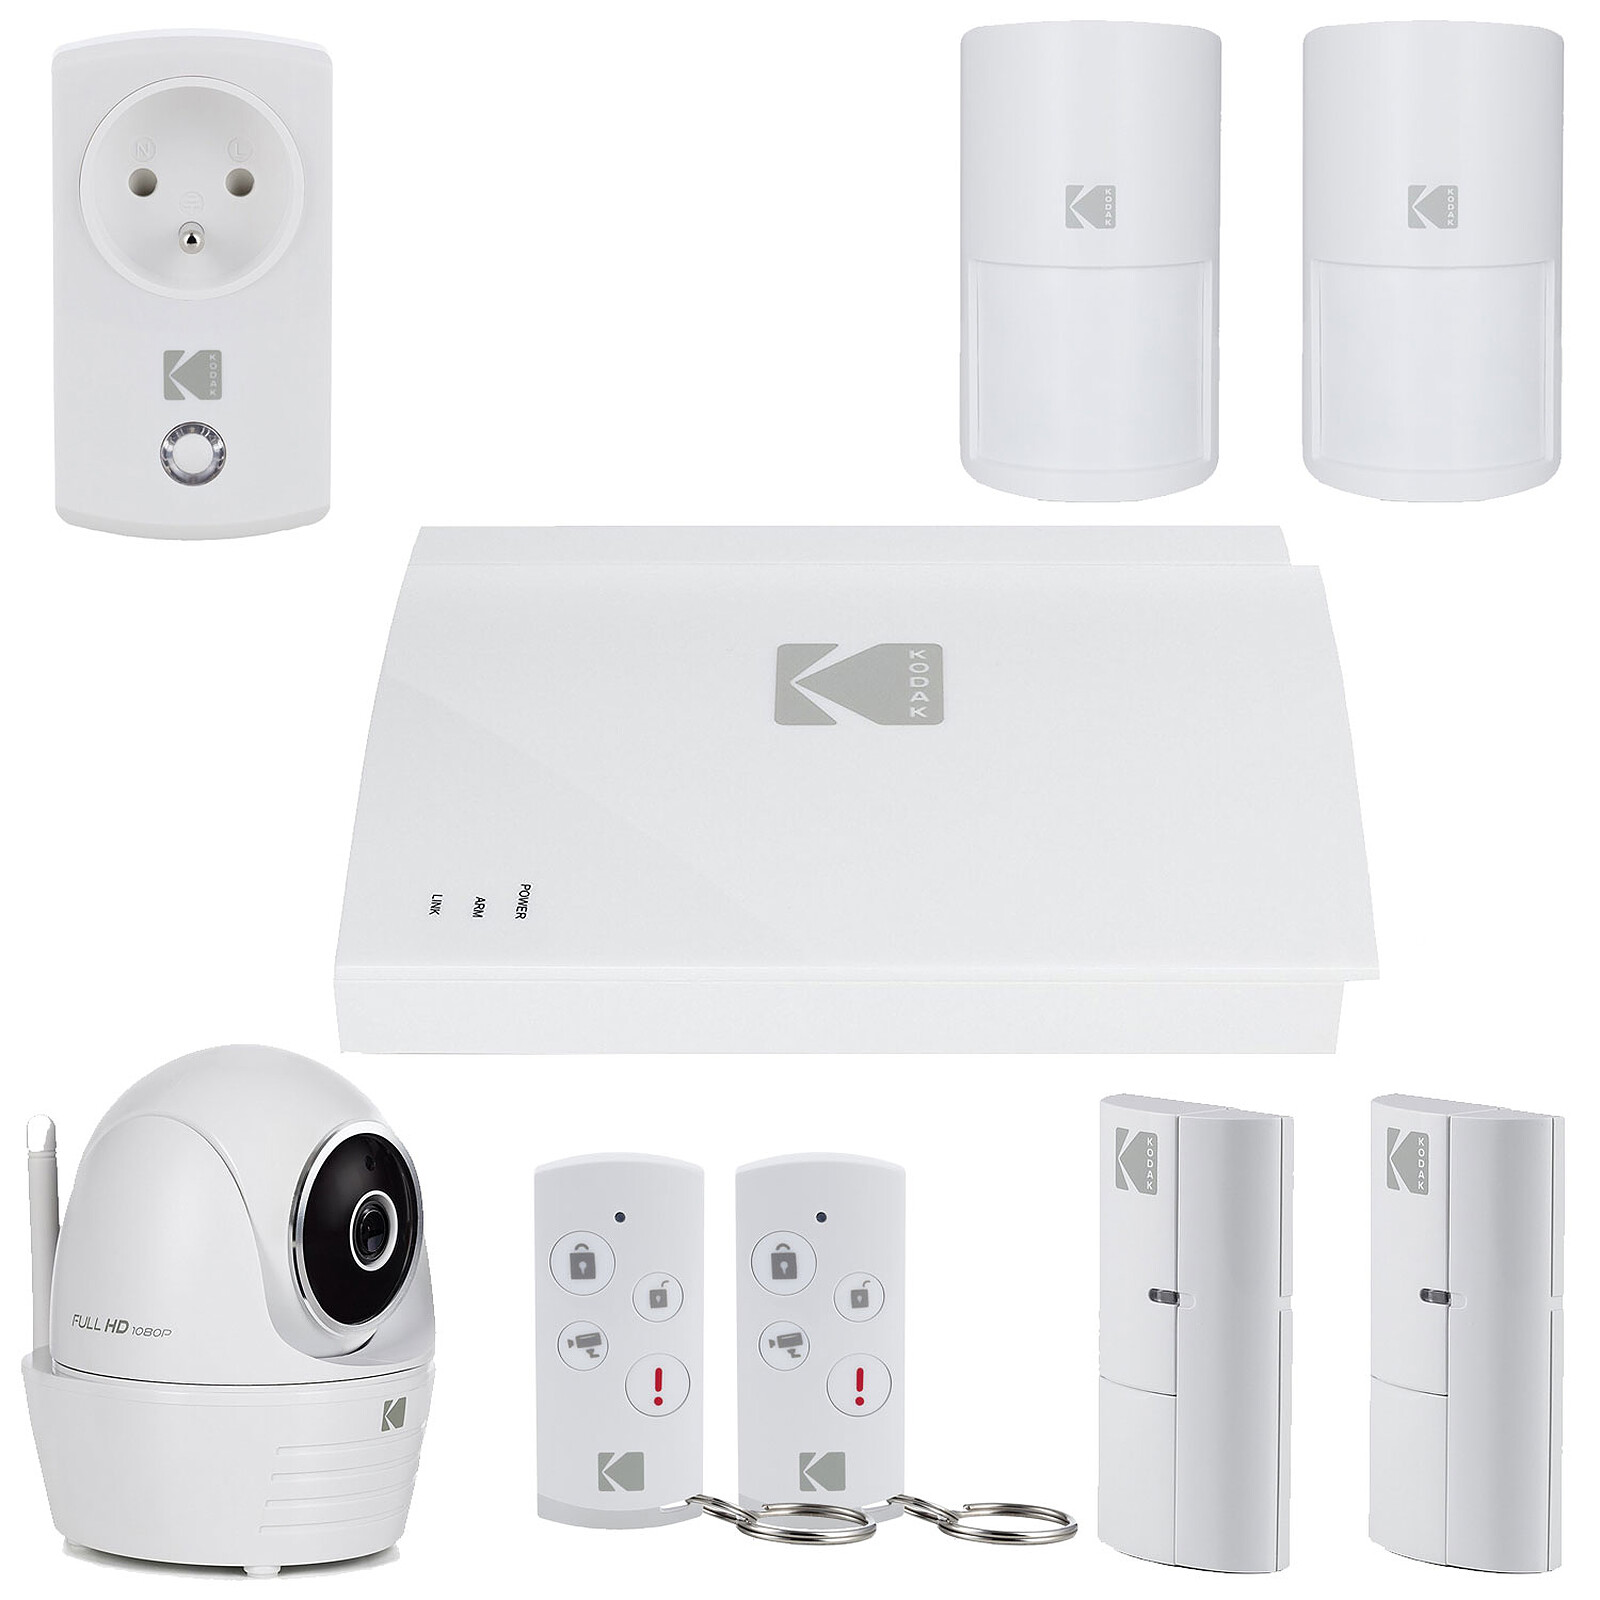 Ajax Systems Alarme maison sans fil AJAX Starter Kit (GSM + Ethernet) - Kit  alarme - LDLC